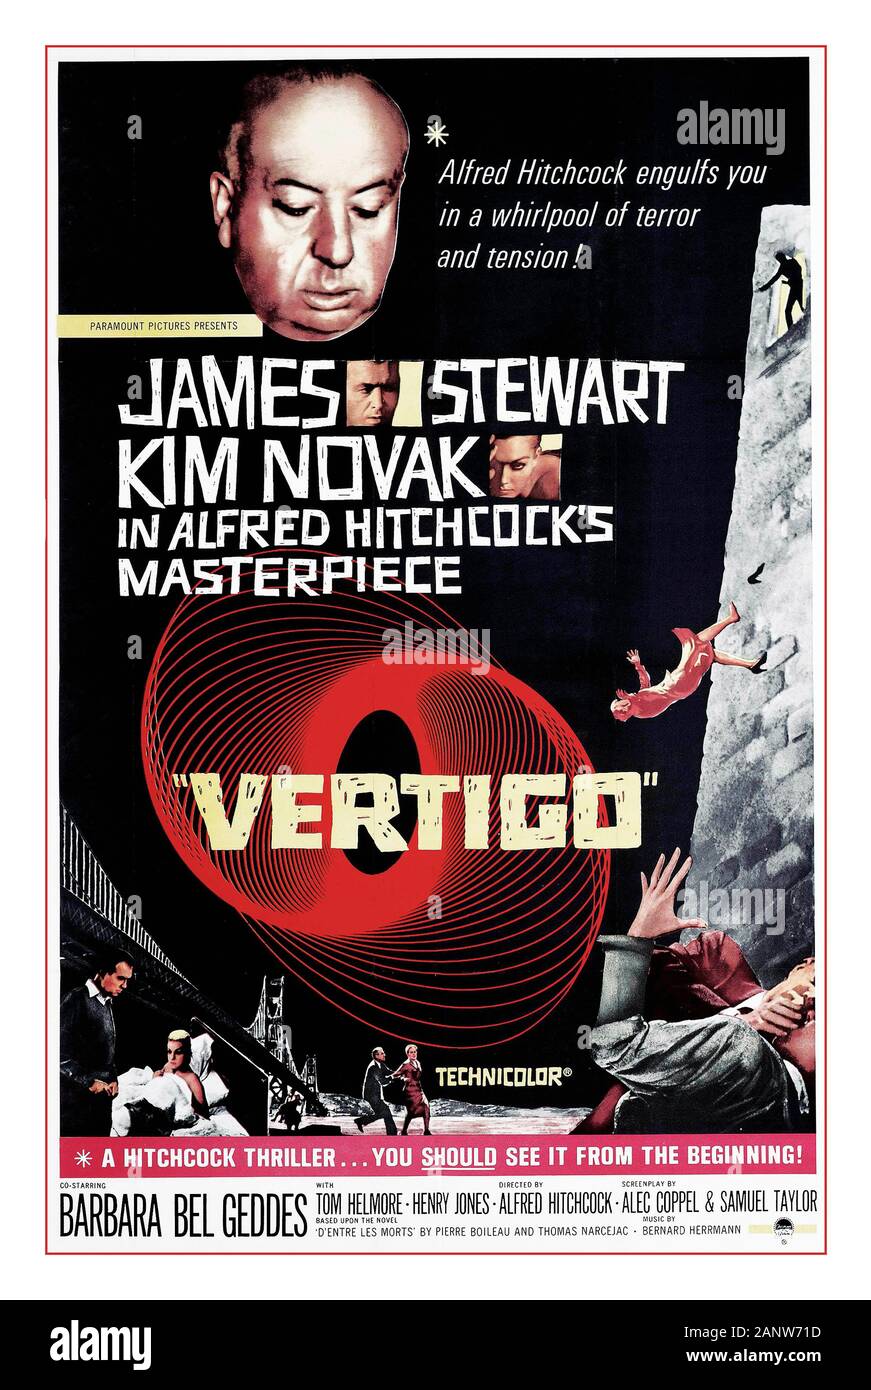 VERTIGO Vintage 1950's Movie Cinema Poster VERTIGO 1958 starring James Stewart Kim Novak Barbara Bel Geddes Directed by Alfred Hitchcock Paramount International U.S. Stock Photo